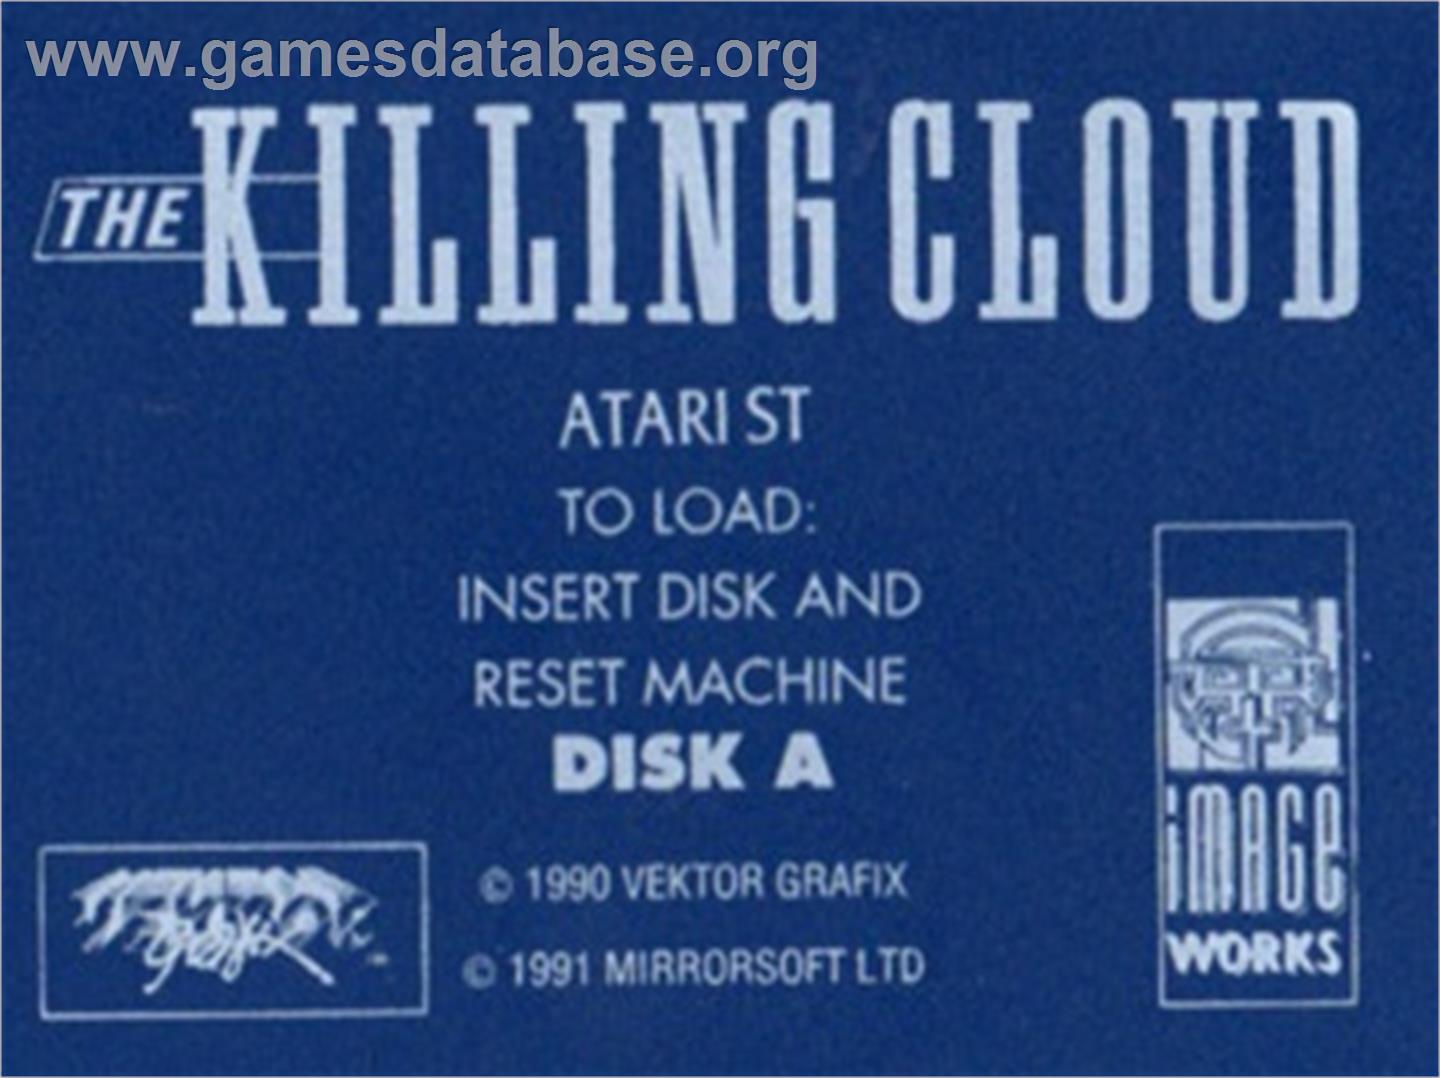 Killing Cloud - Atari ST - Artwork - Cartridge Top